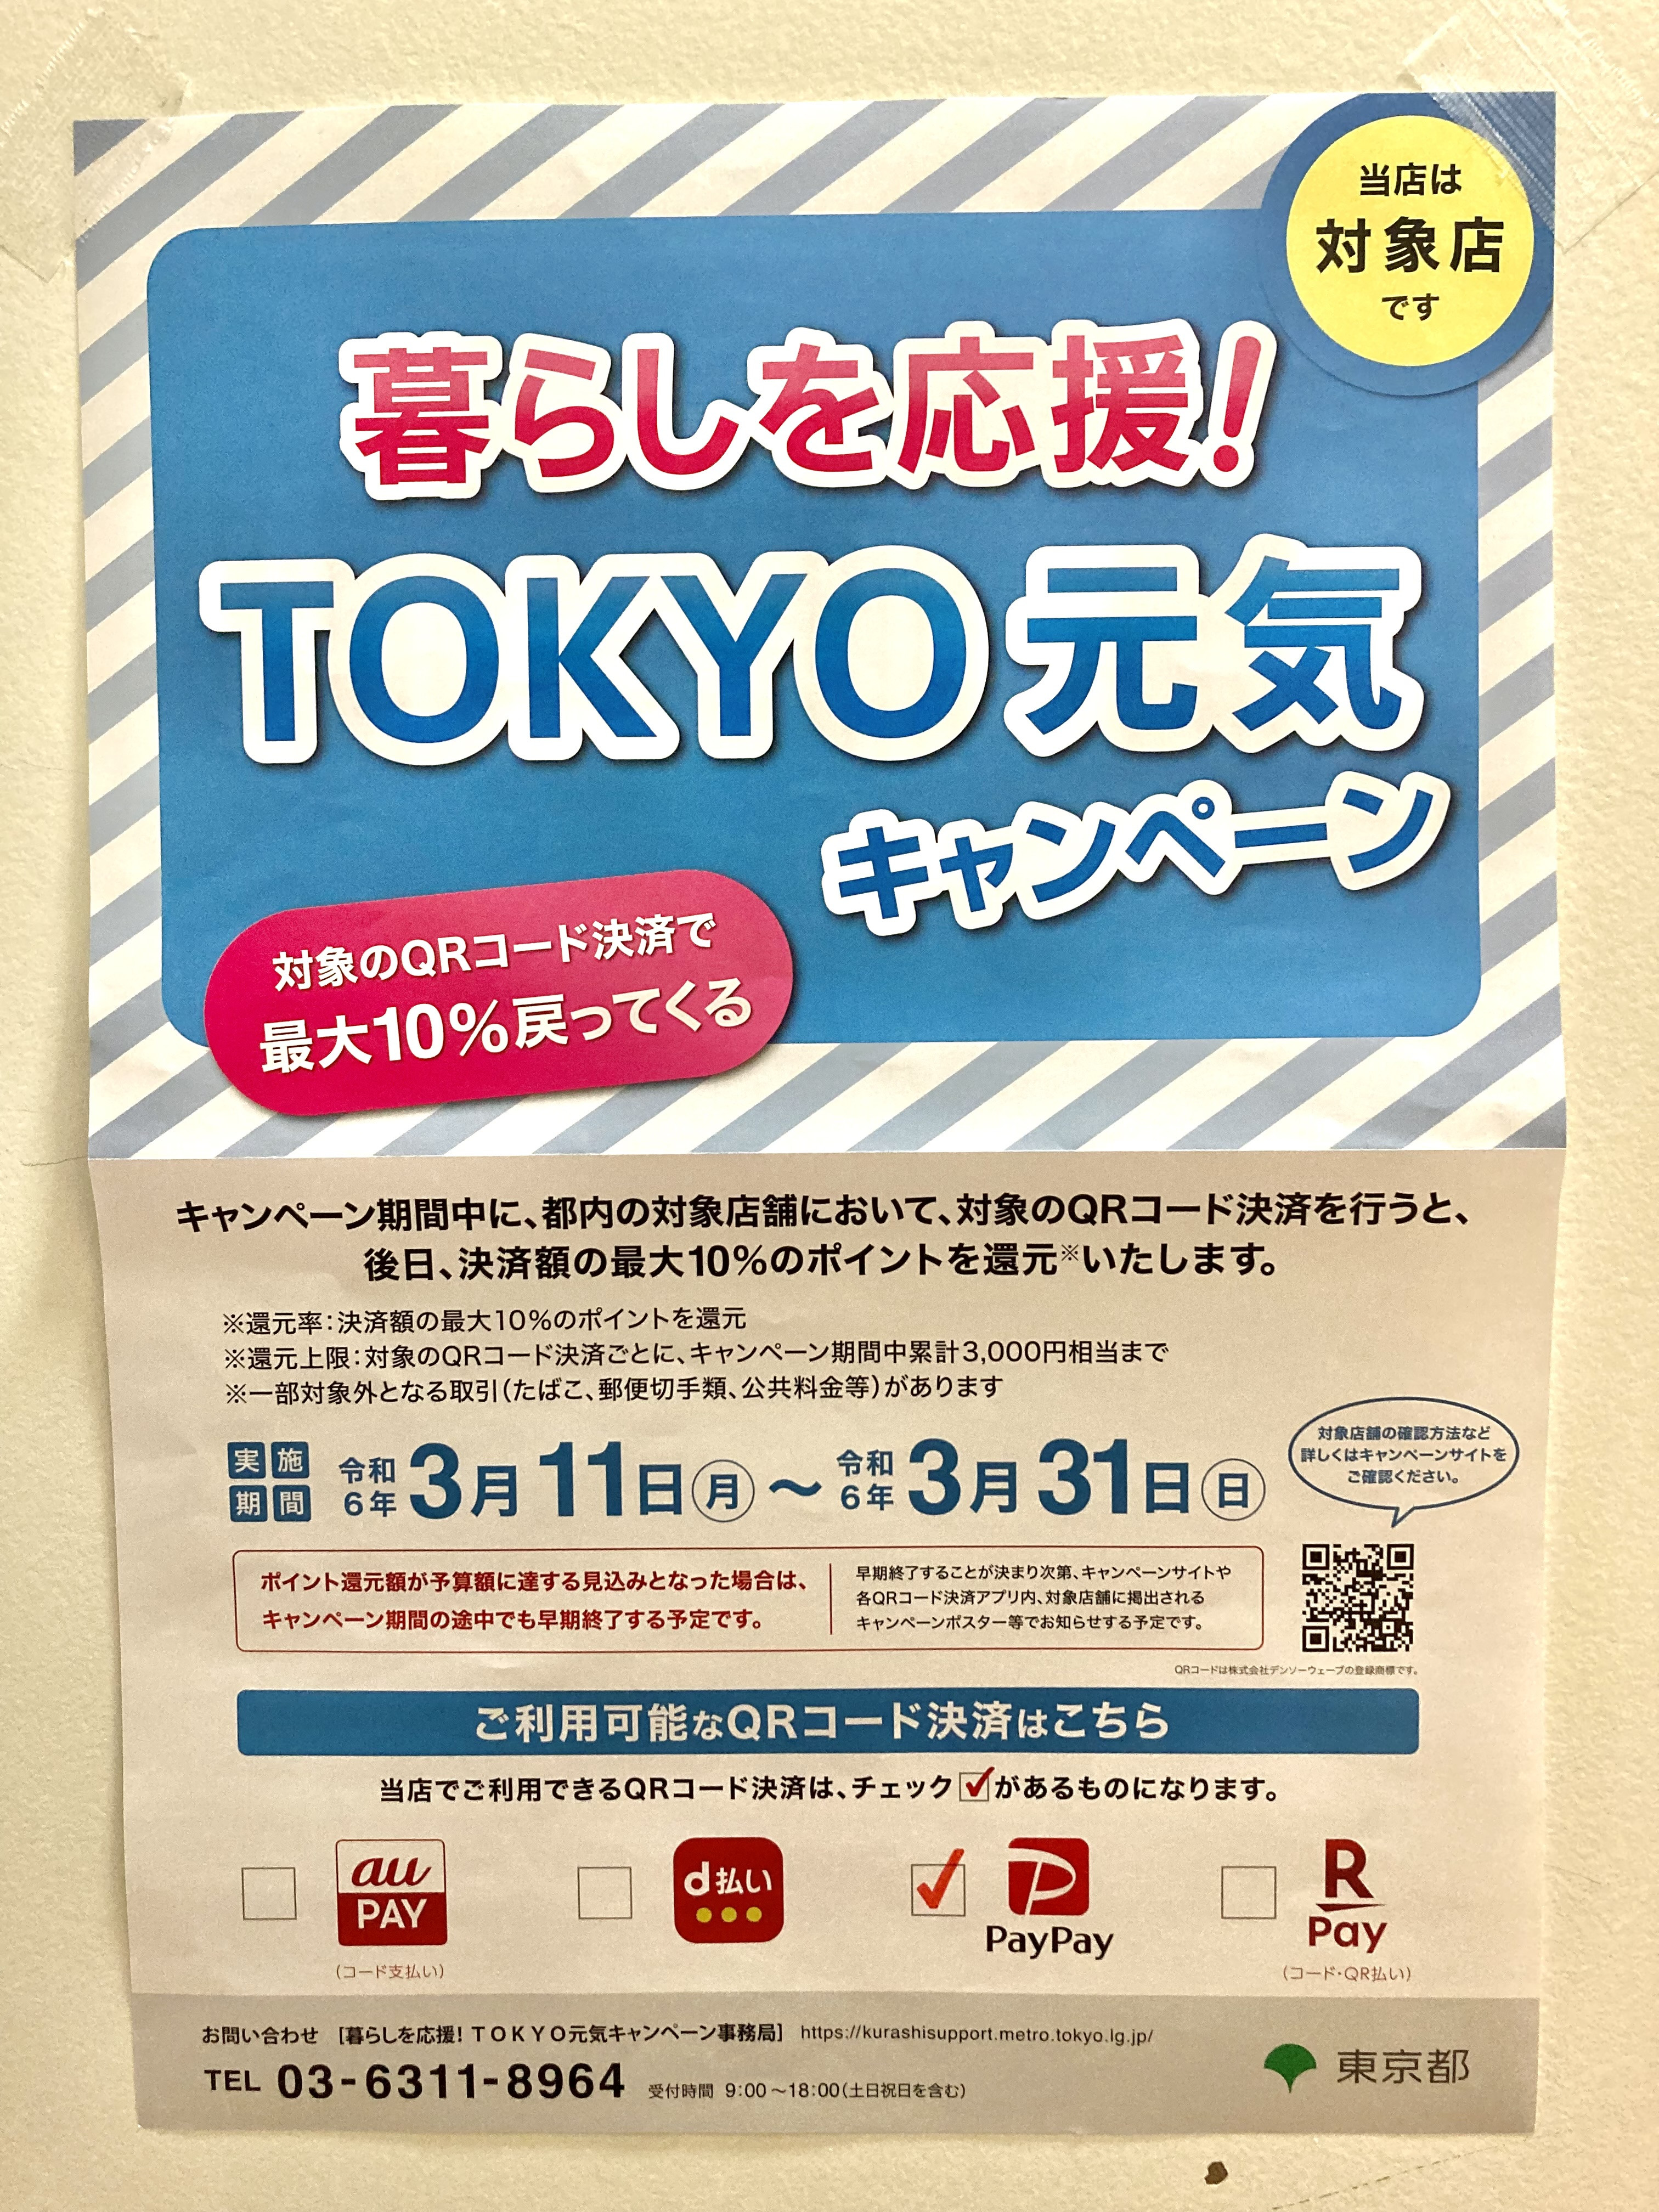 「TOKYO元気キャンペーン」当店では【PayPay】のみ対応。